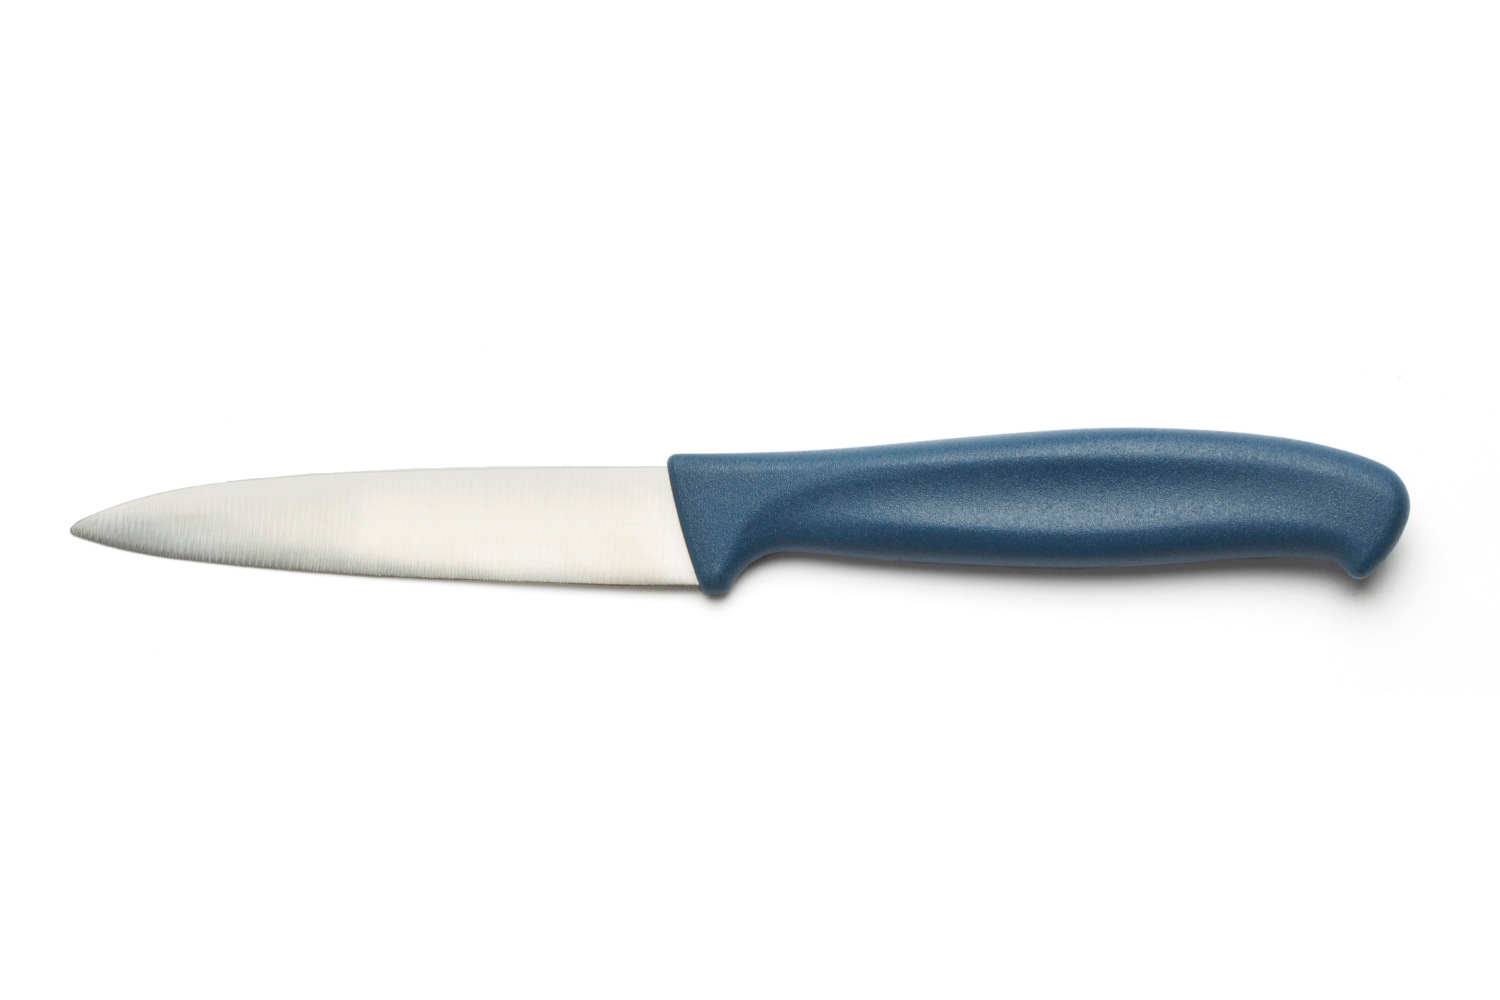 MICRO SERRATED UTILITY BLUE KNIFE